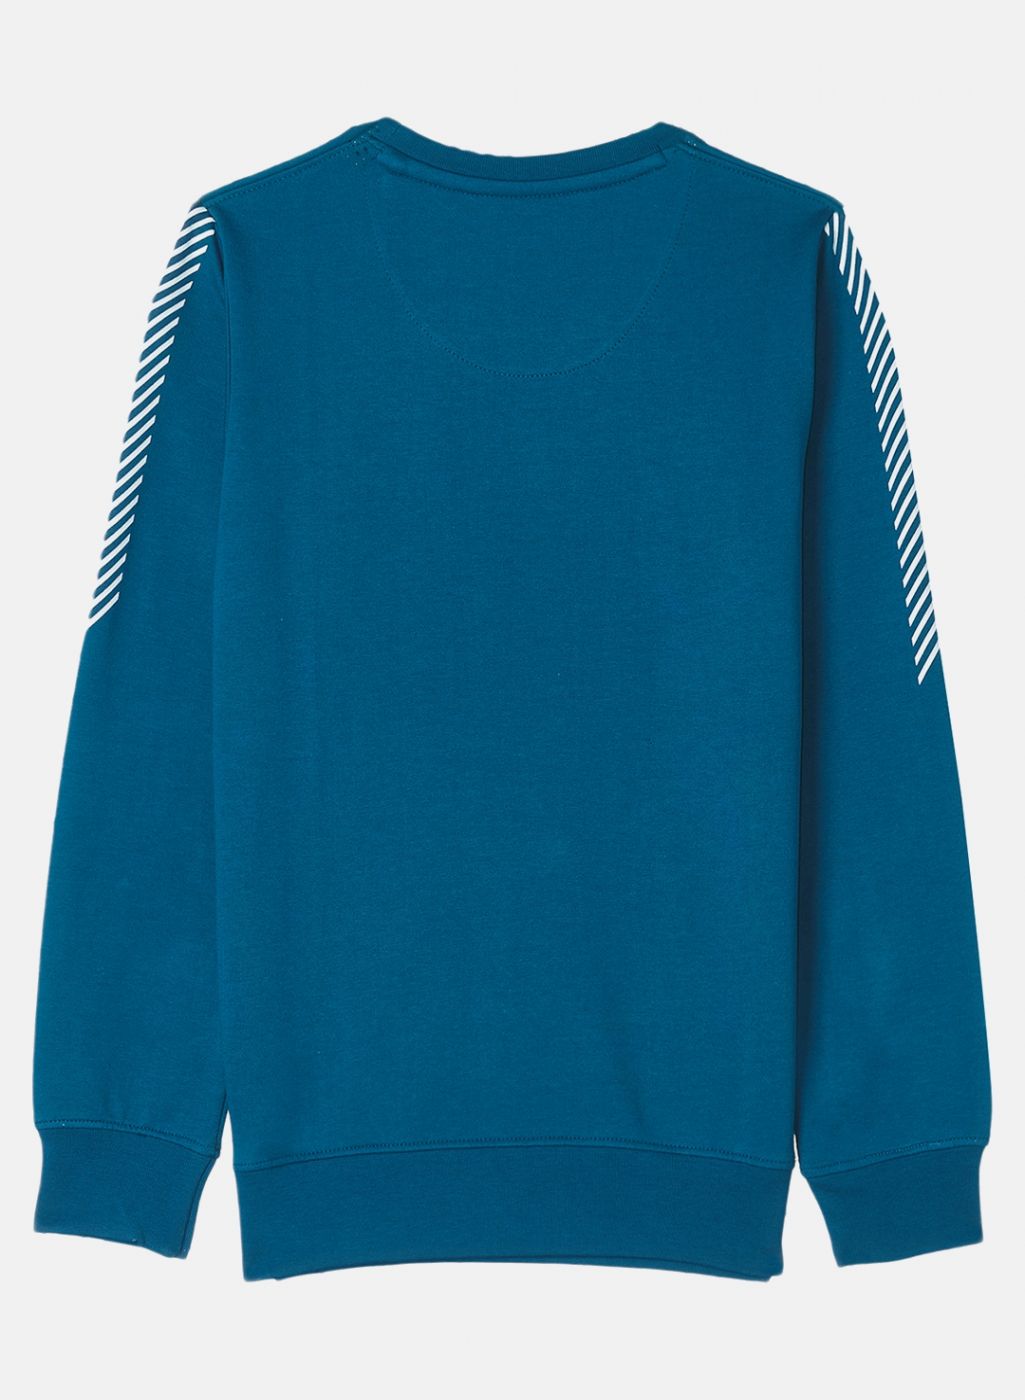 Boys Blue Printed Sweatshirt